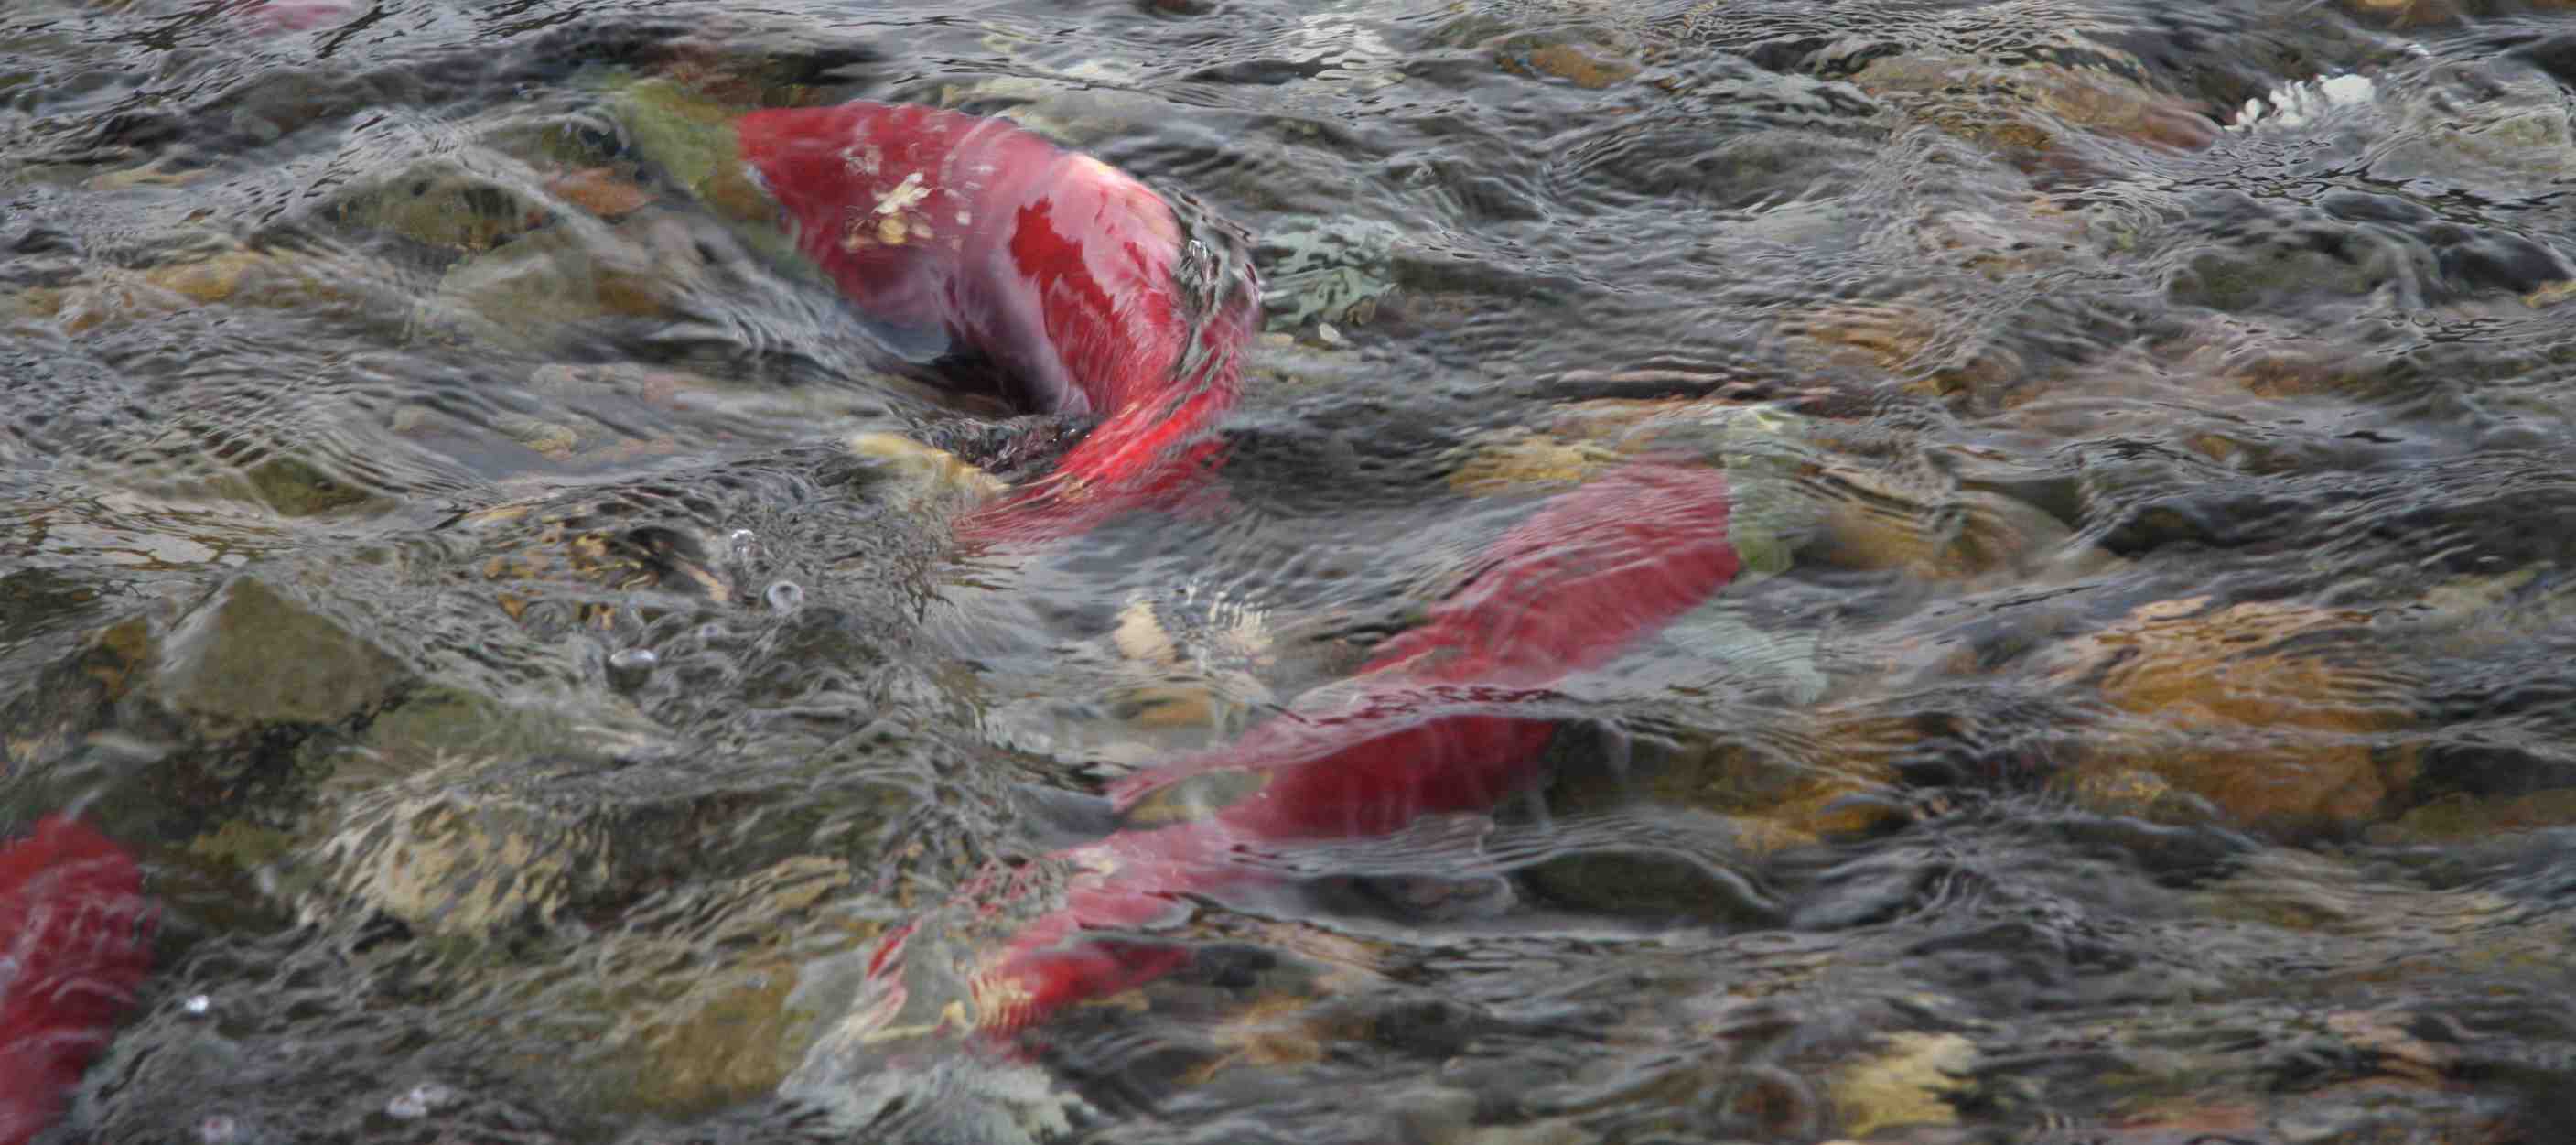 salmon wallpaper,koi,sockeye salmon,salmon,geological phenomenon,fish